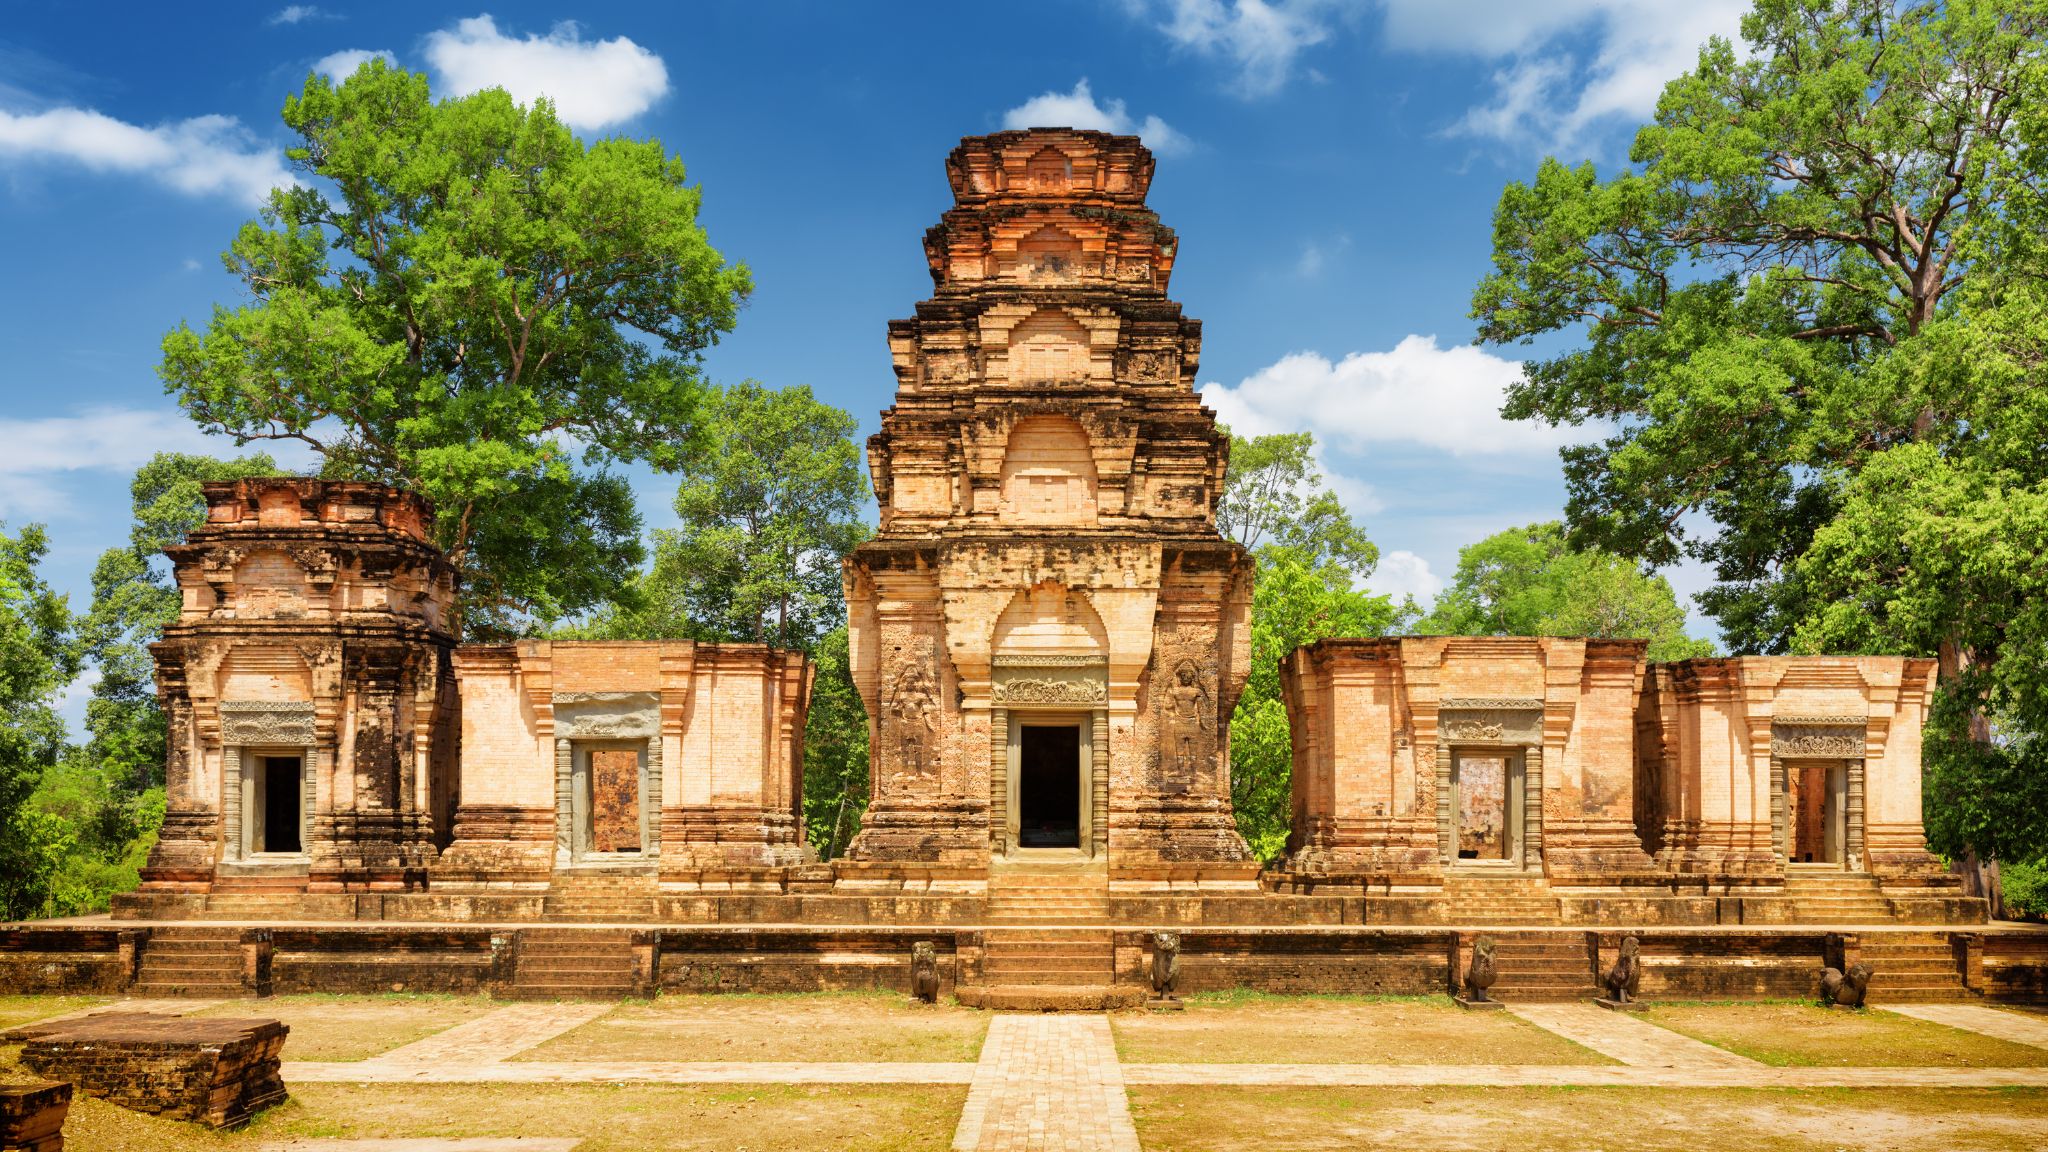 Day 1 Catch A Glimpse Into The Artistic Brilliance Of Khmer Empire